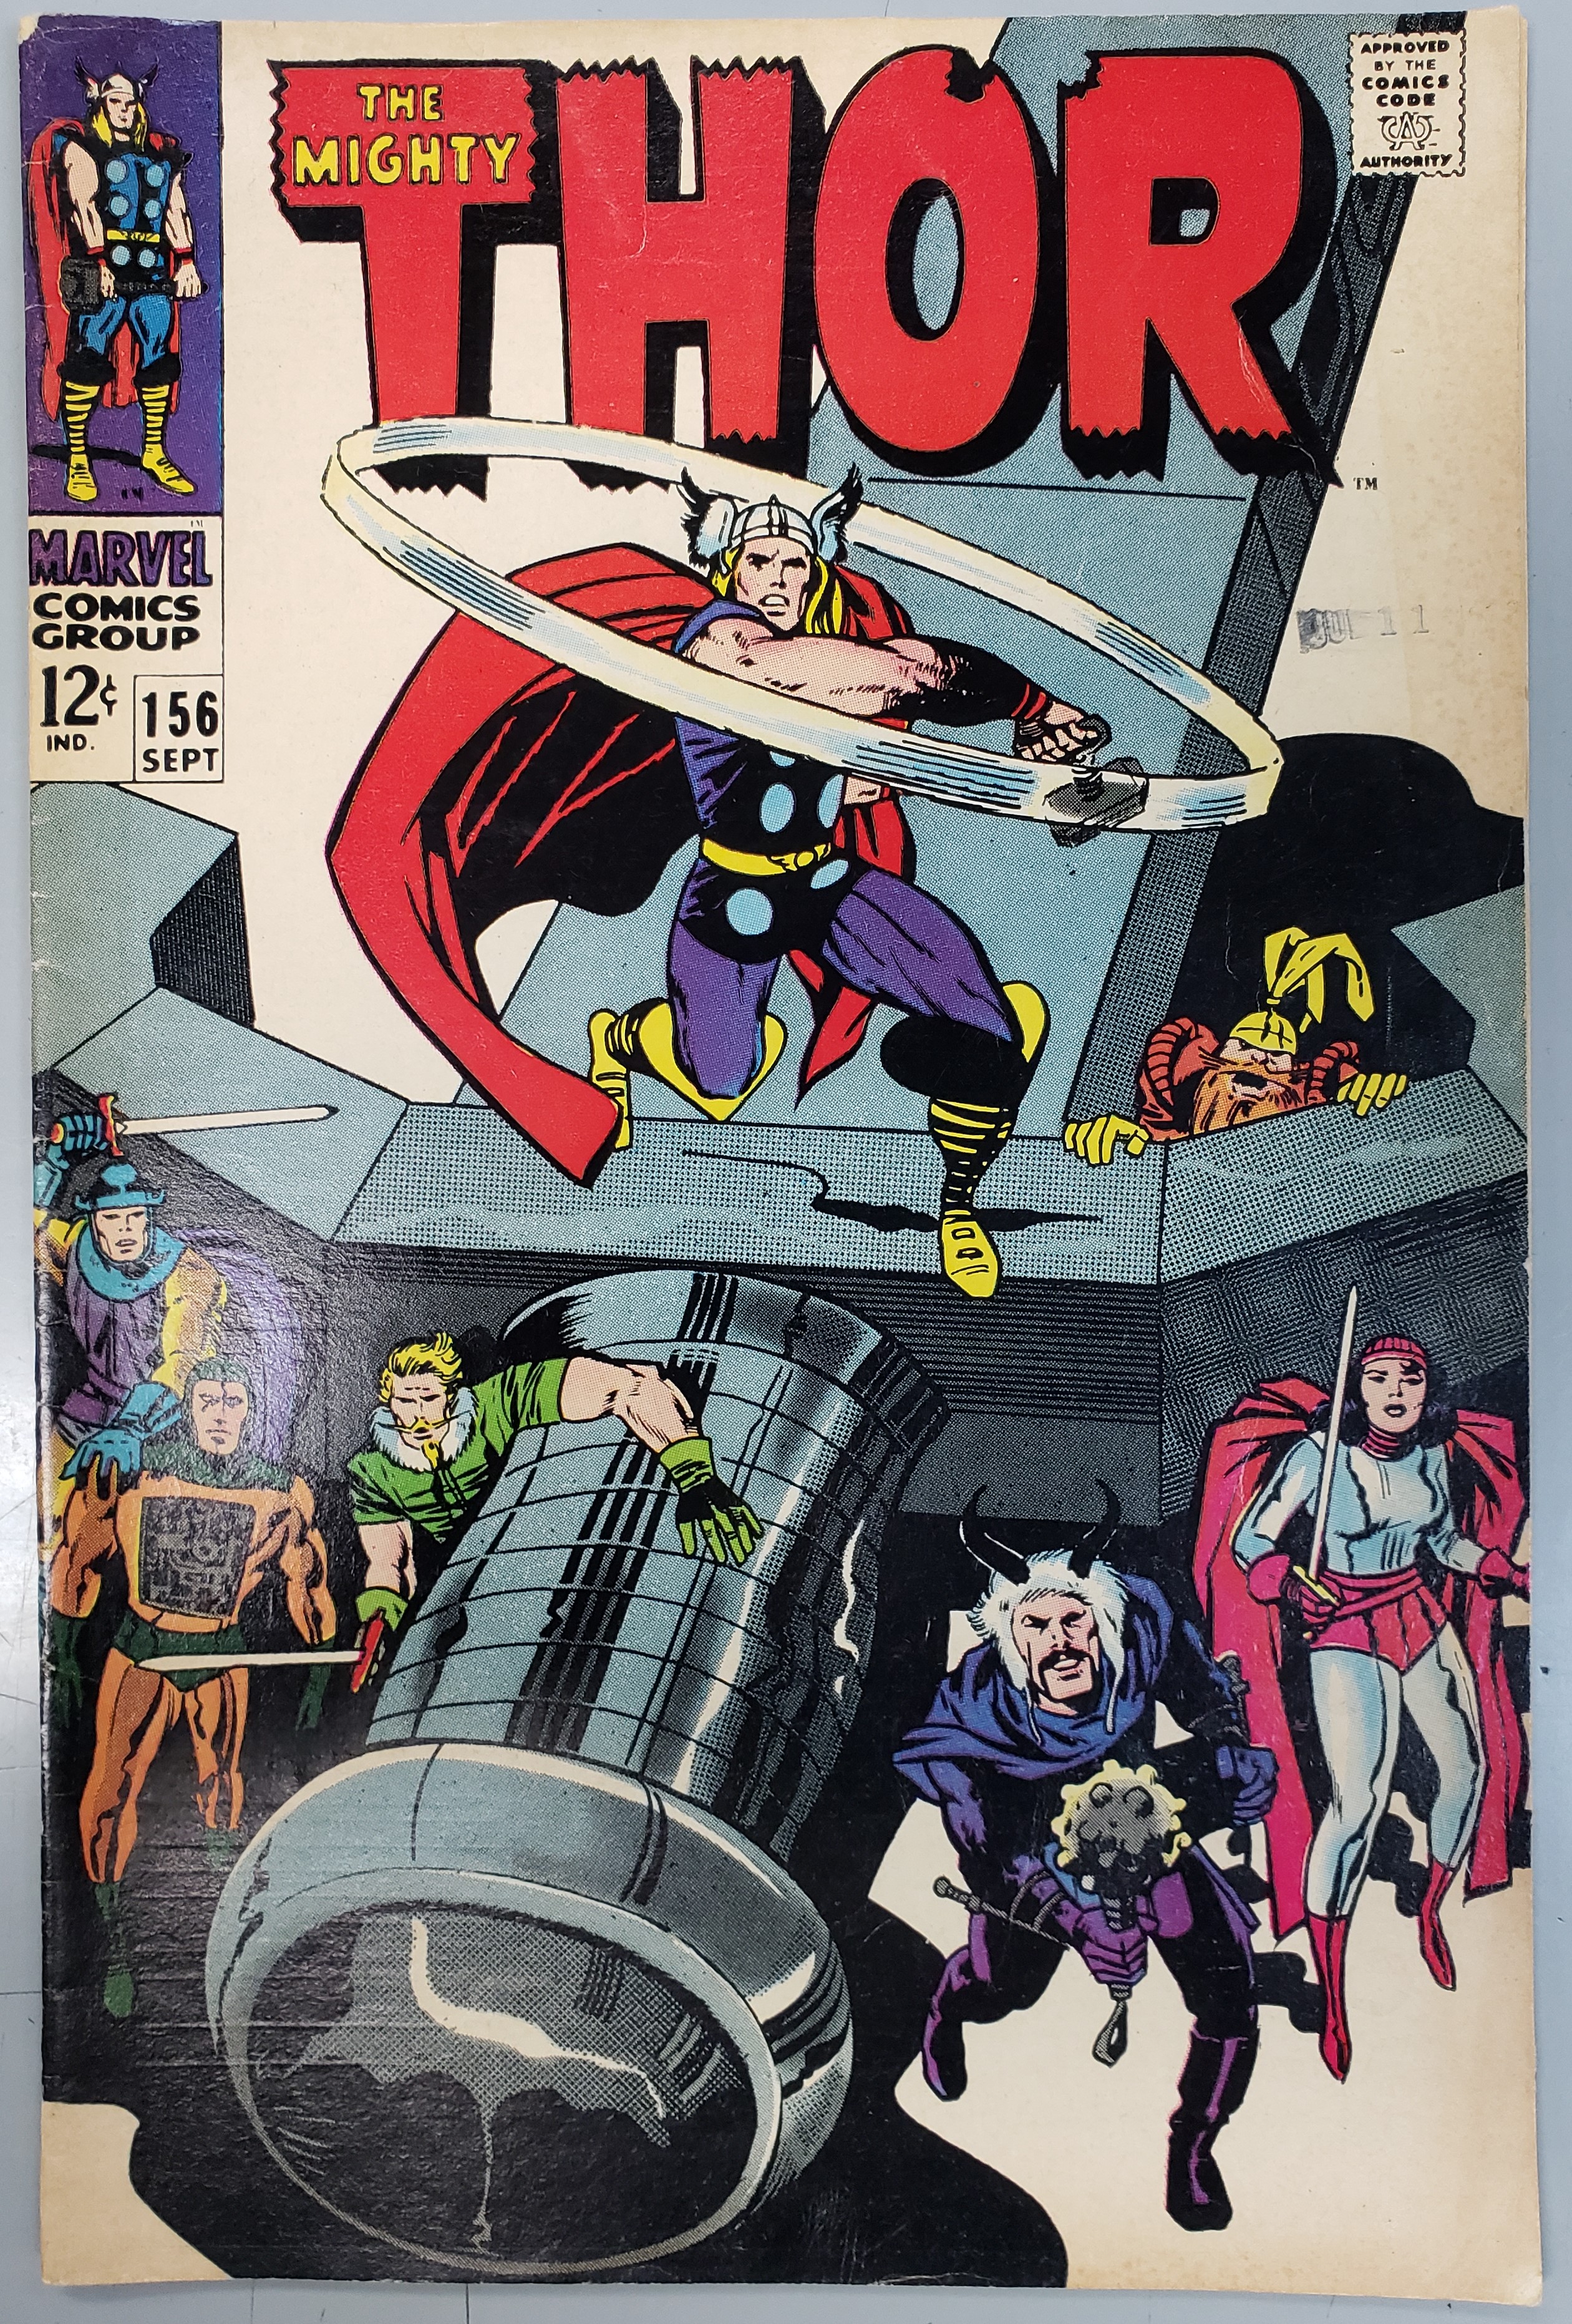 Thor #156 (1962 1st Series)